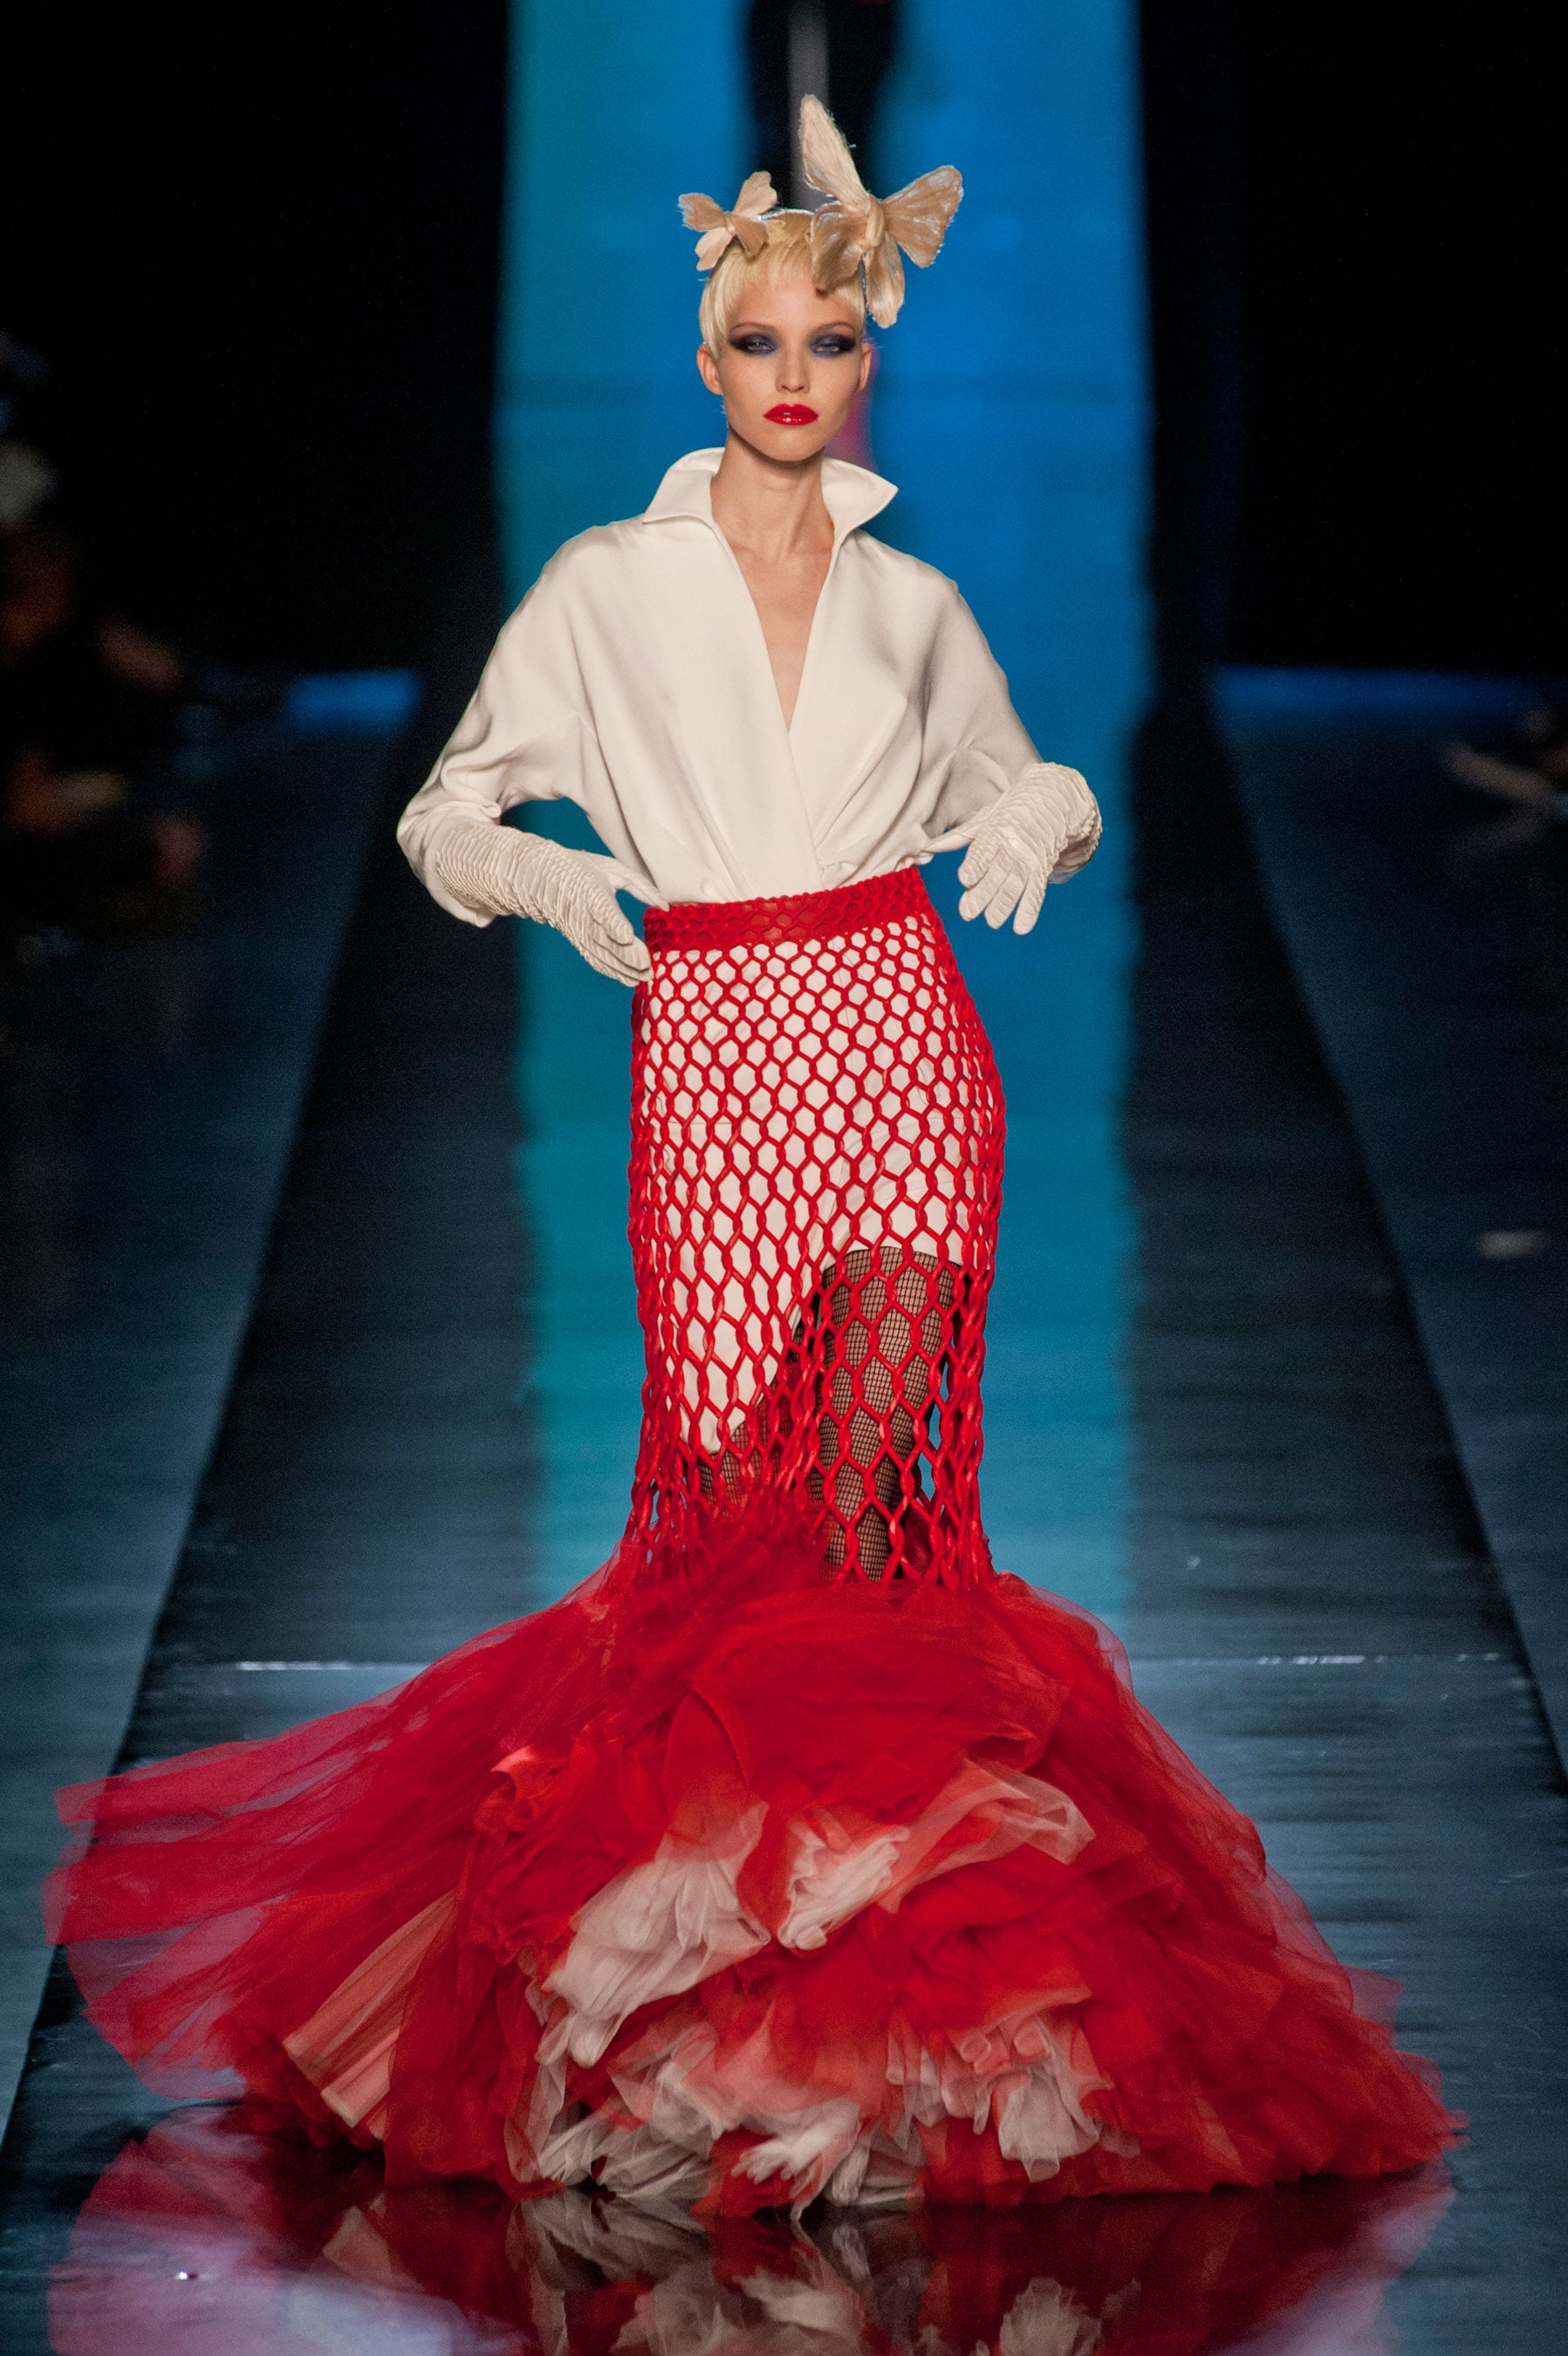 Jean Paul Gaultier Haute Couture Spring 2014 | Jean Paul Gaultier's